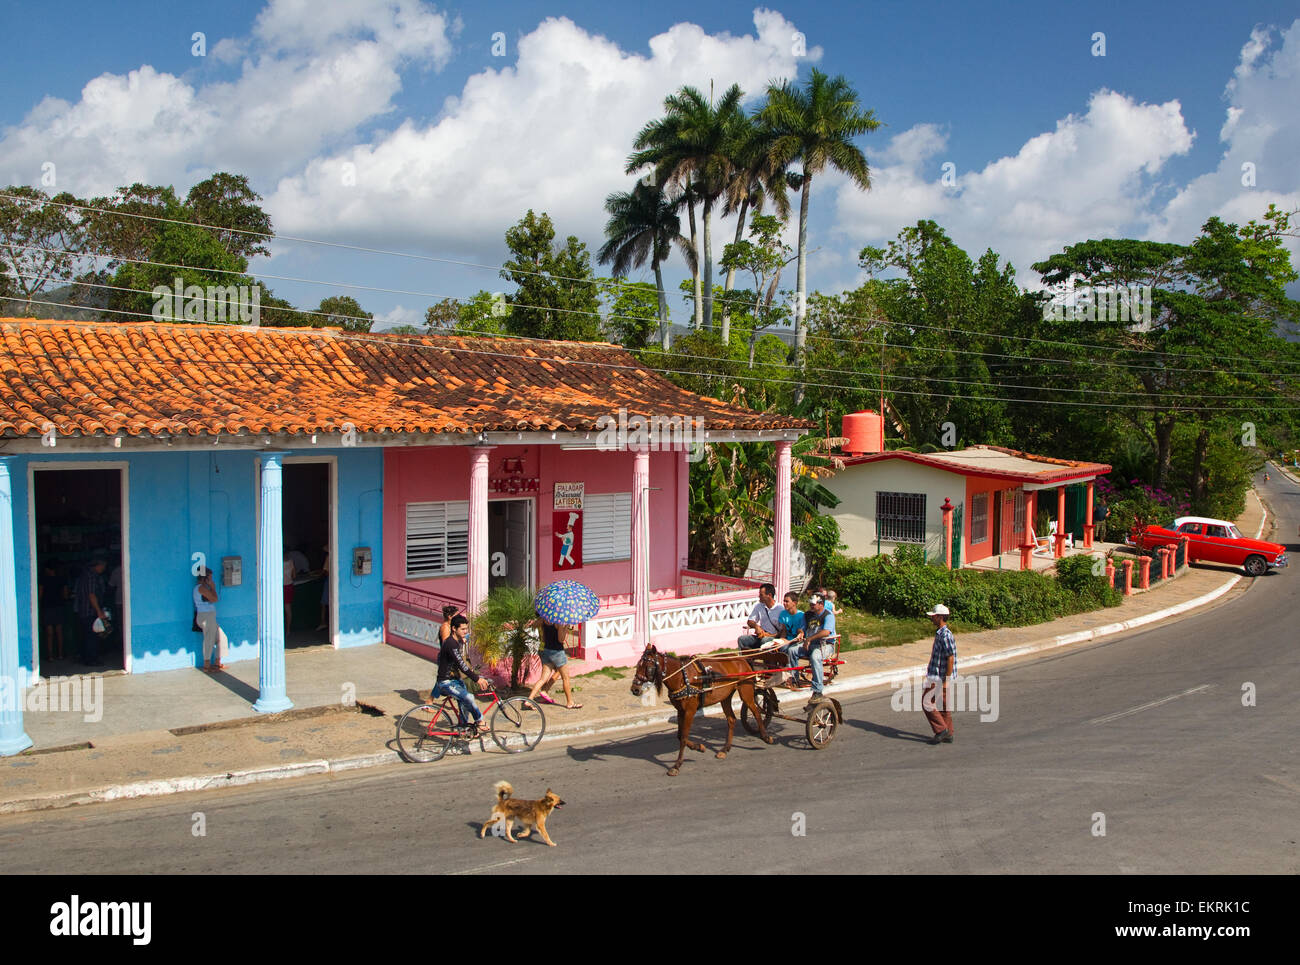 A street scene in Vinales,Cuba Stock Photo